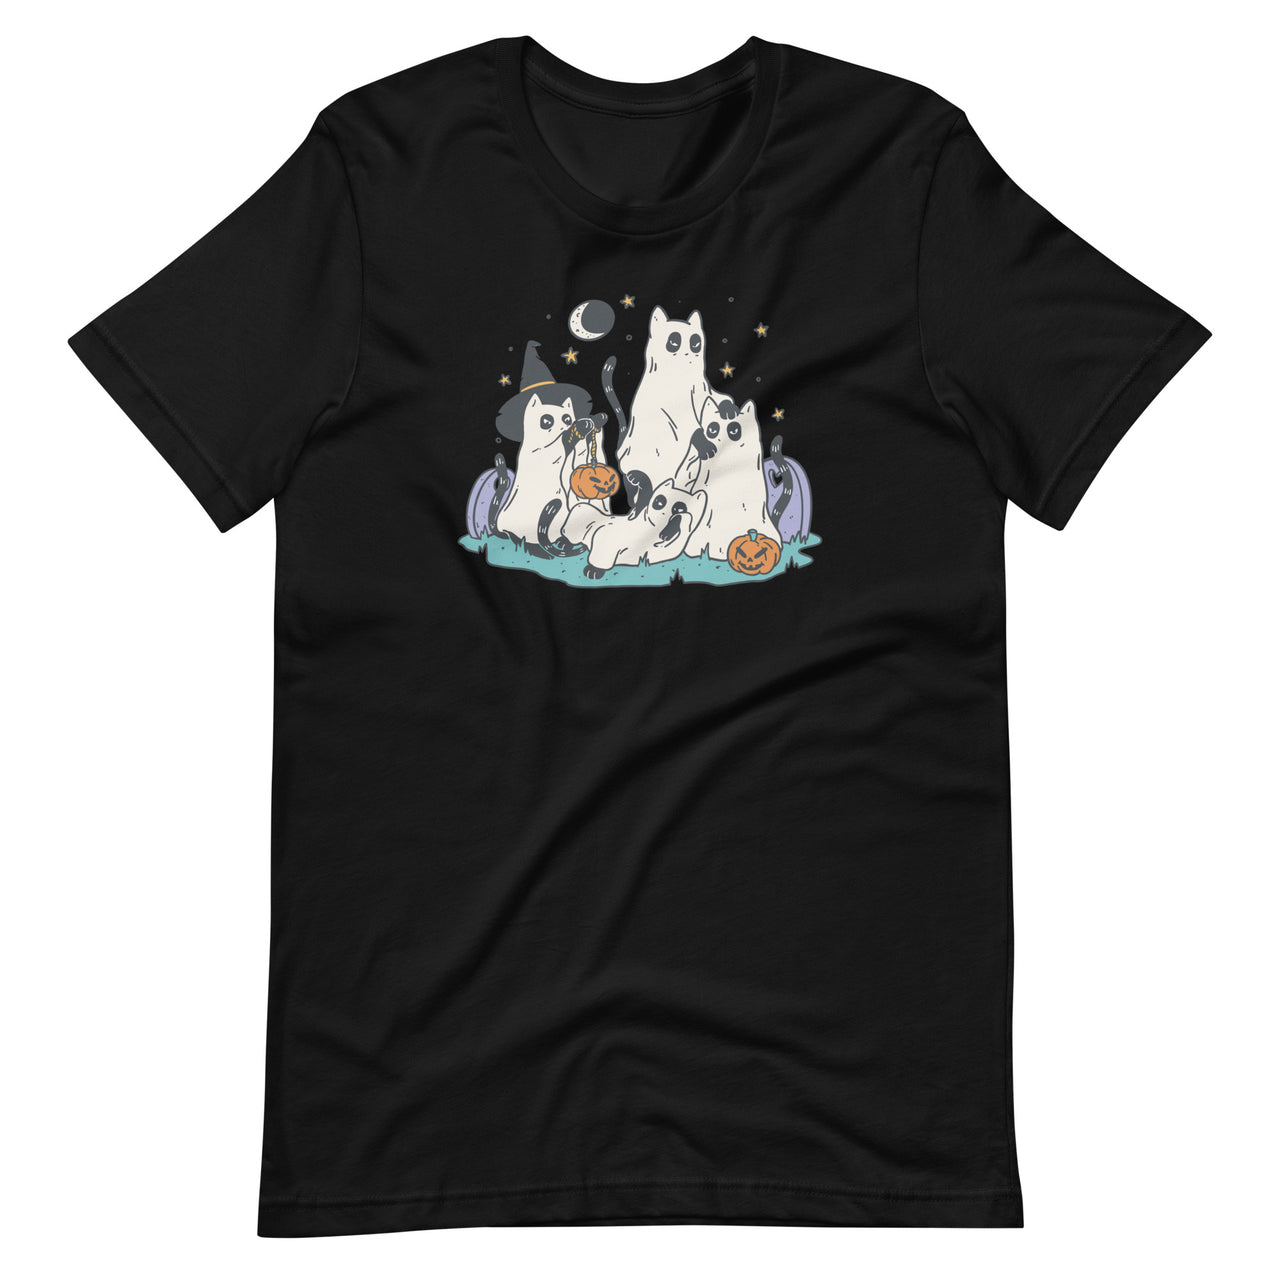 Ghost Cats T-Shirt, Spooky Halloween Phantom Kitty Tee Shirt